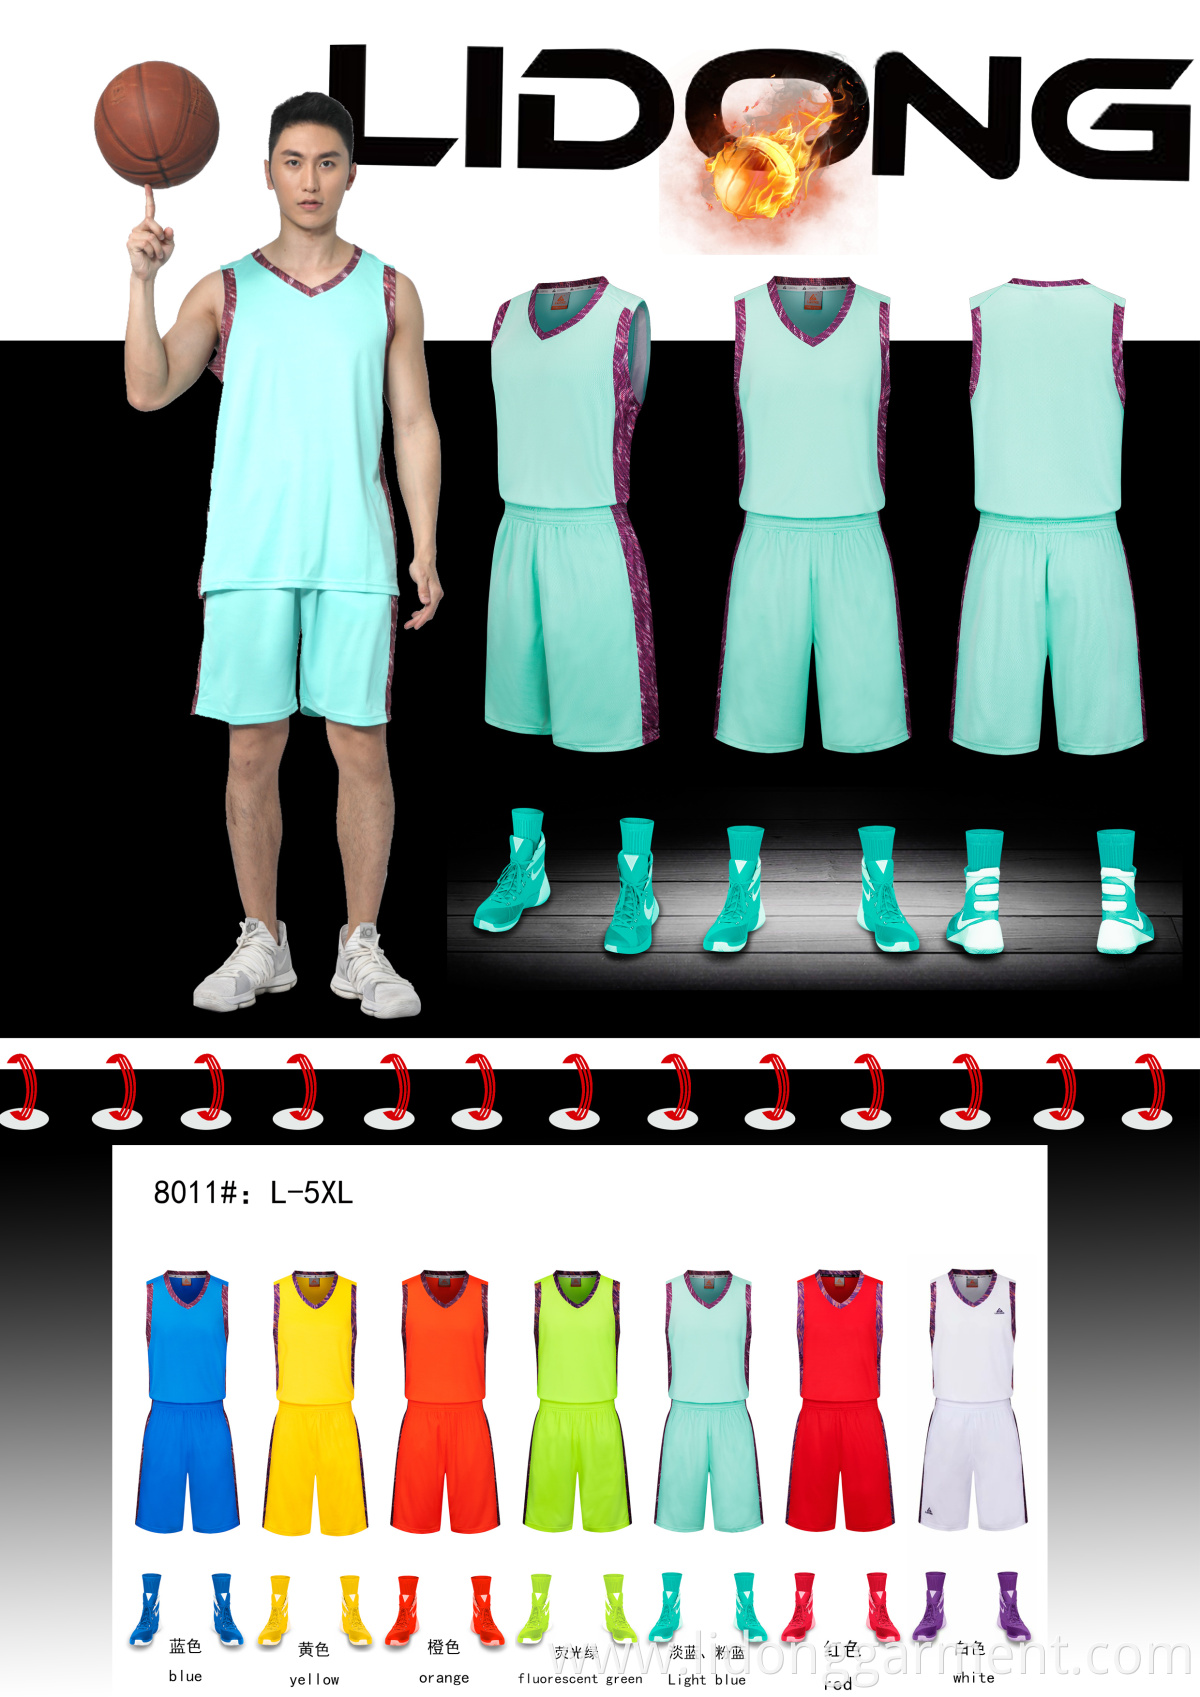 Cheap Custom Hot-Sale Blank Basketball Jerseys Uniform Design Color Blue